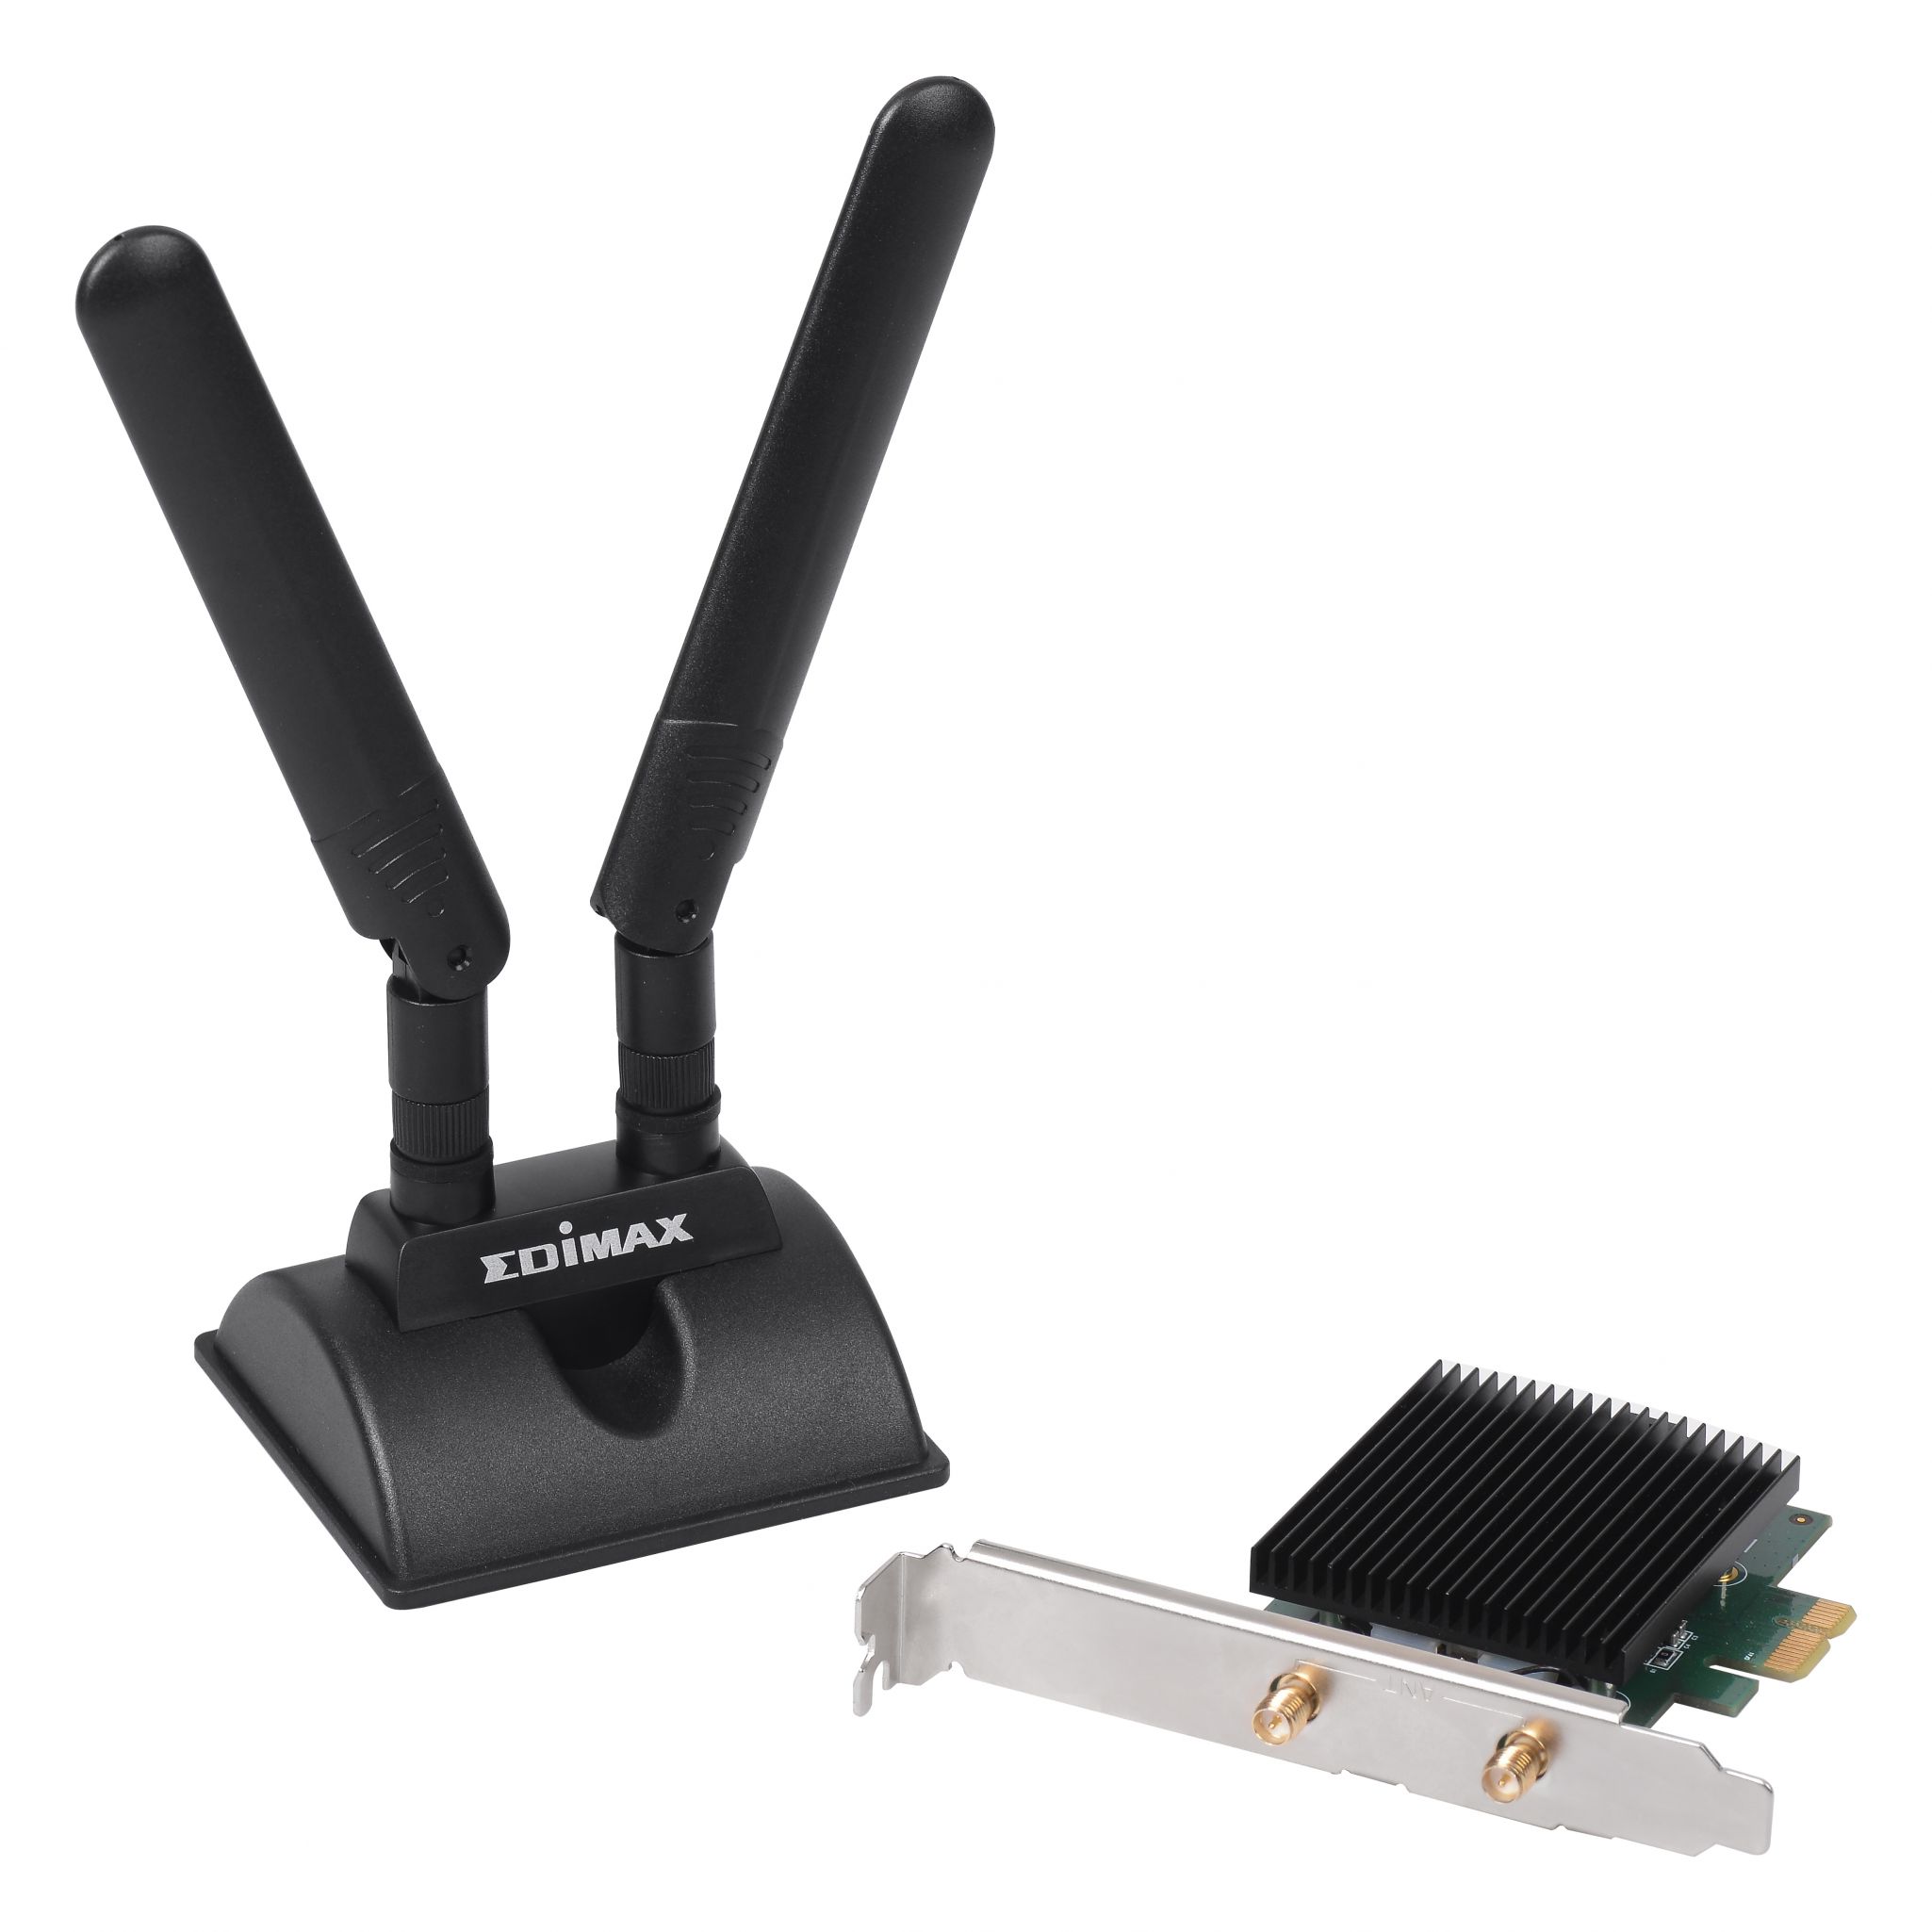 Bluetooth 5.0 Nano USB Adapter - EDIMAX